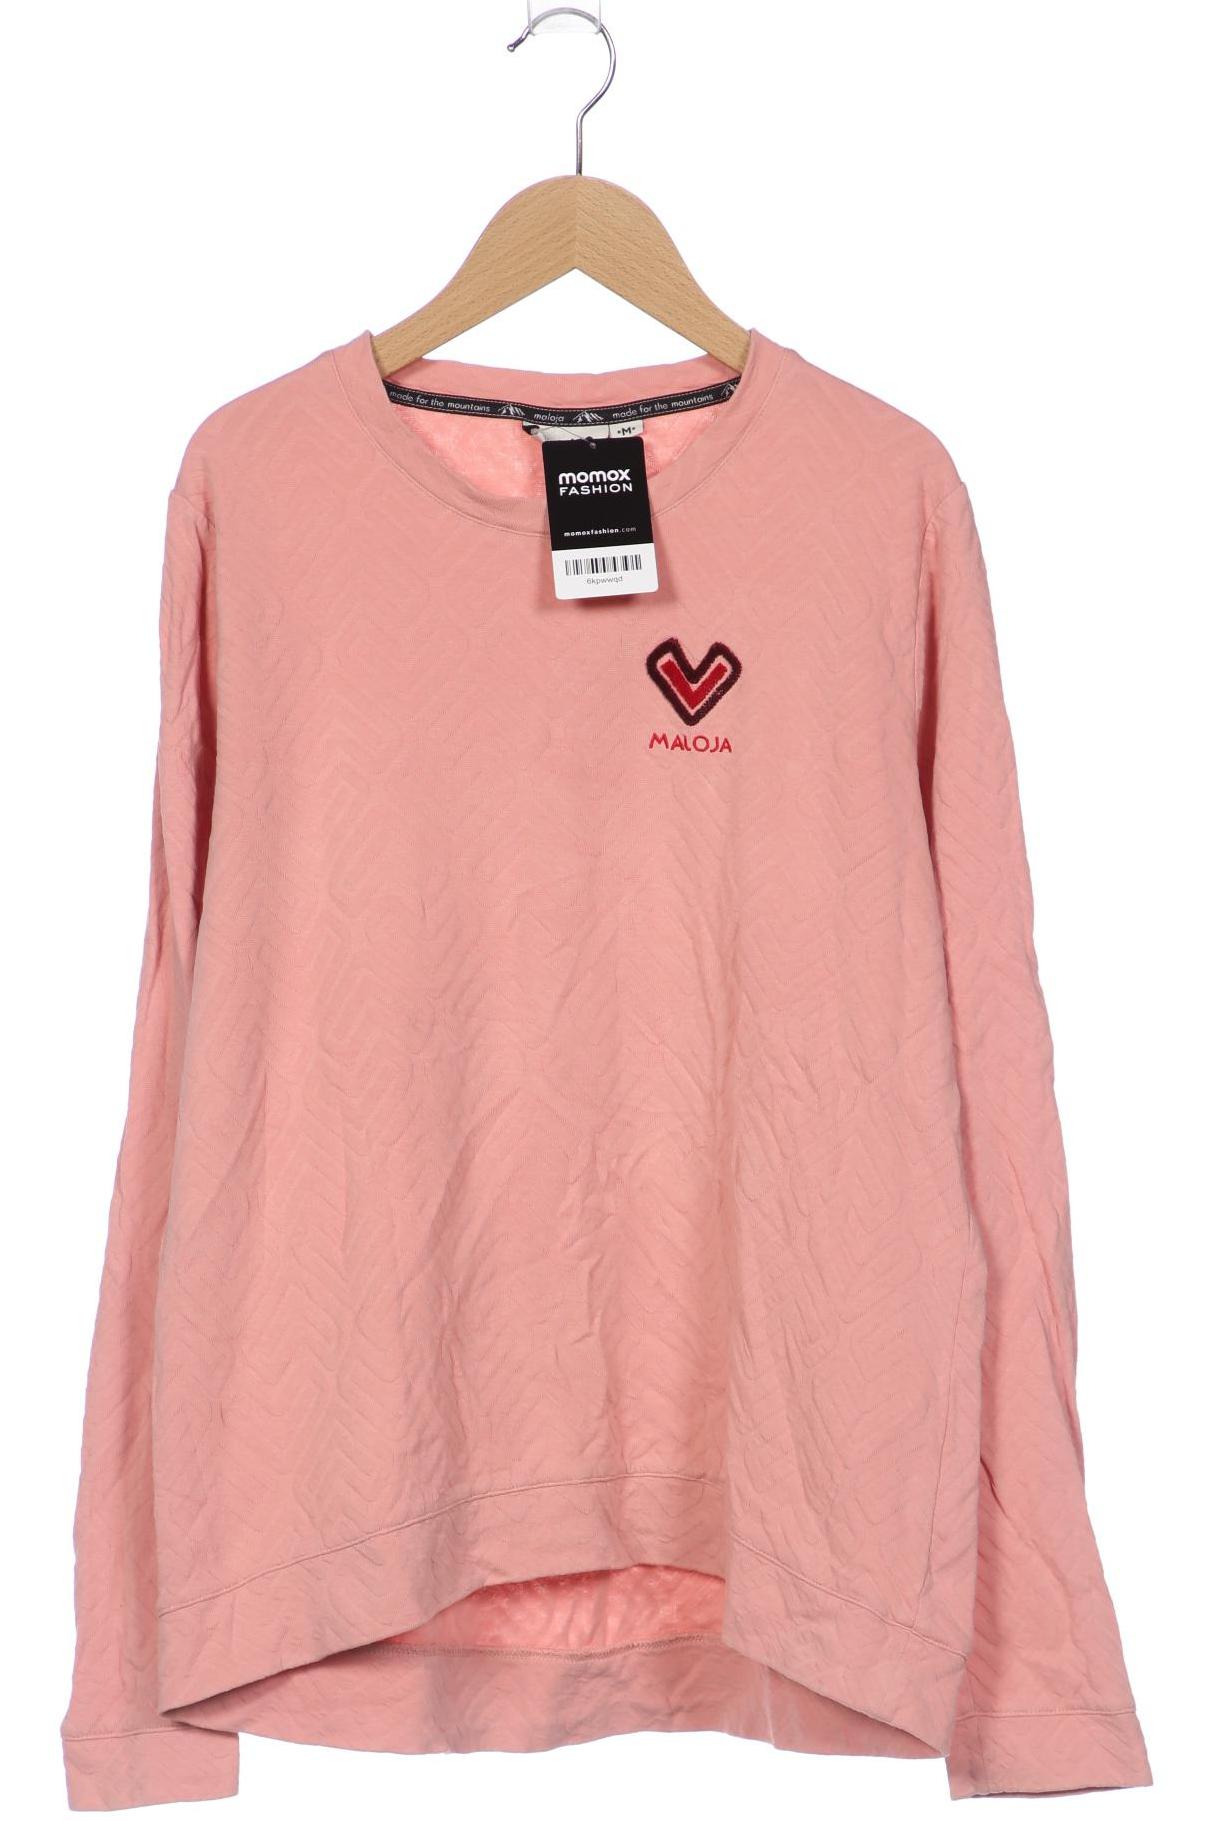 Maloja Damen Sweatshirt, pink von Maloja